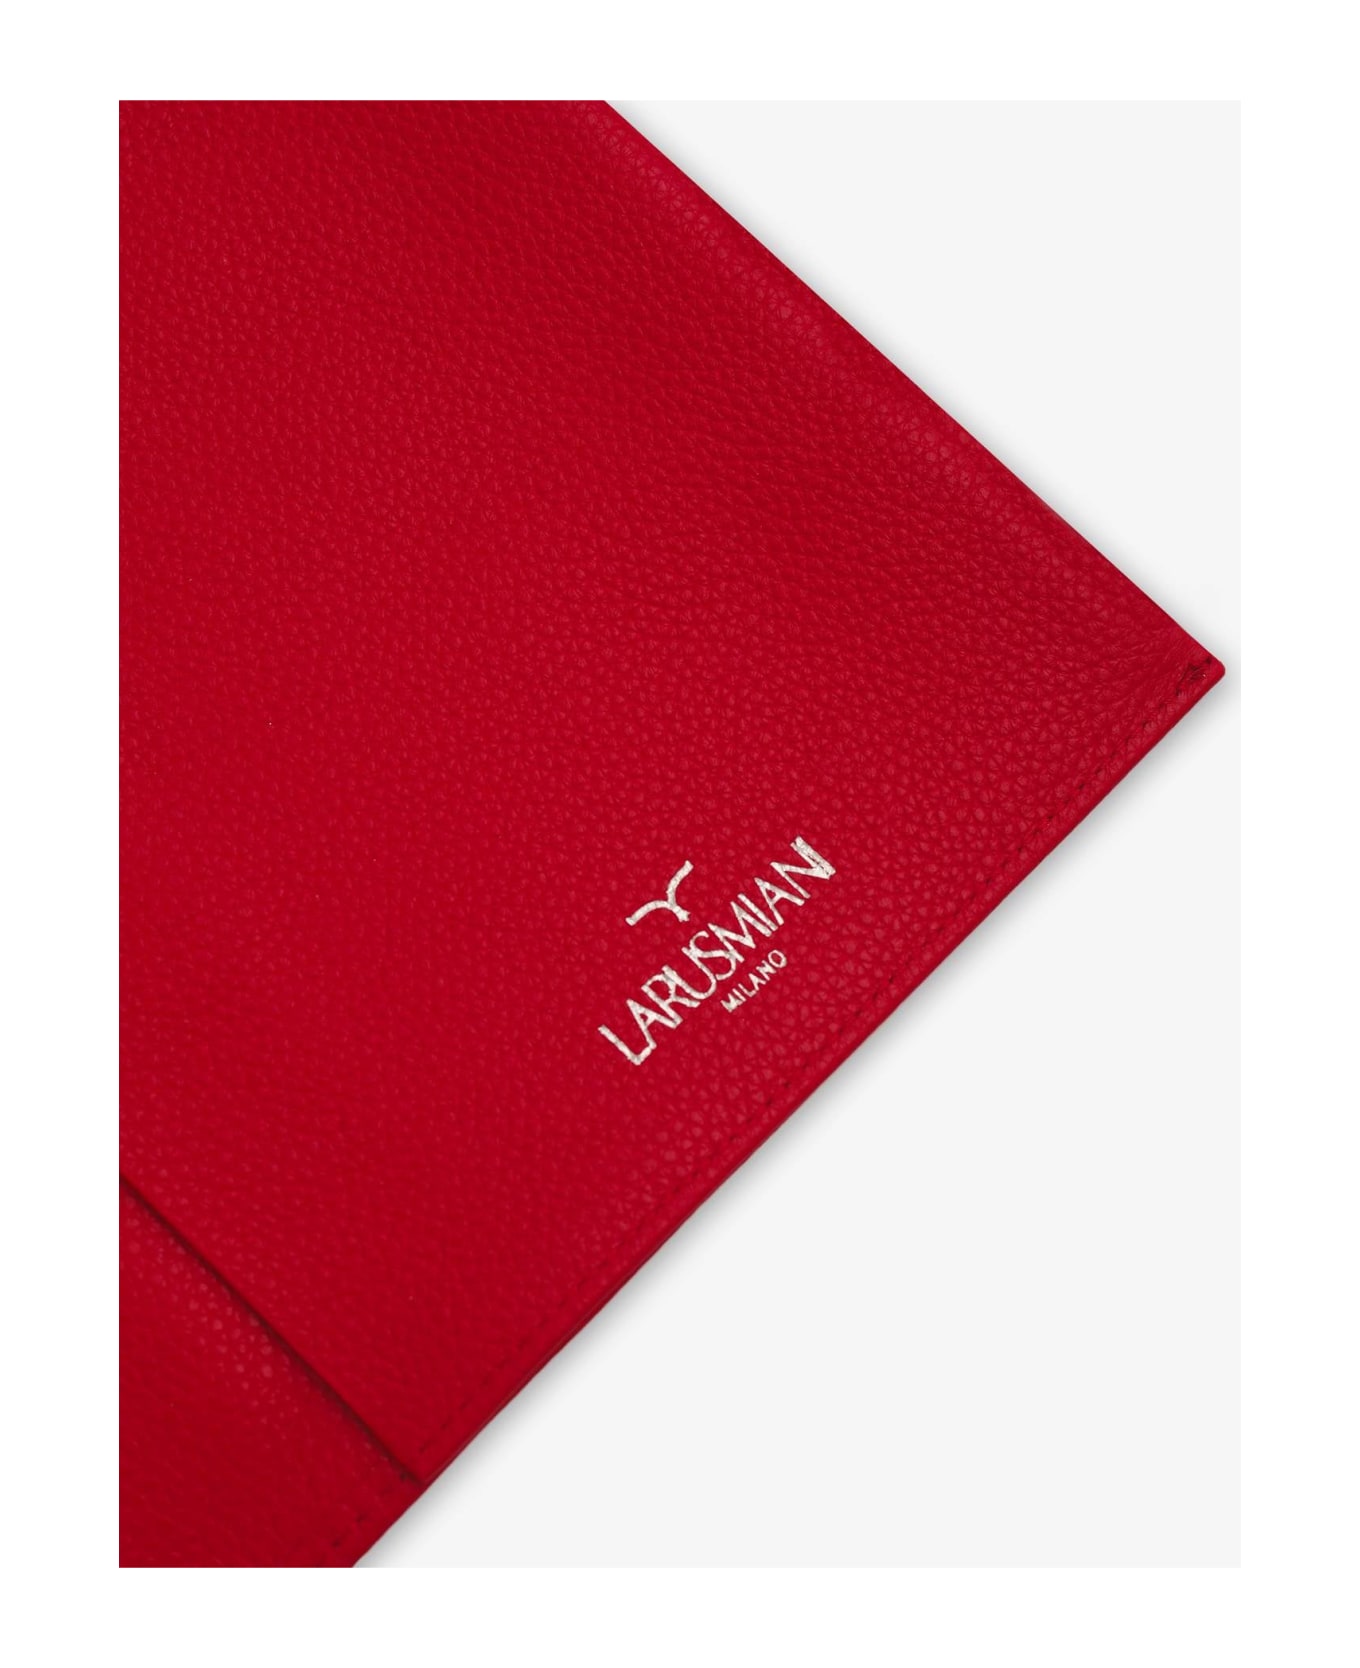 Larusmiani Leather Car Folder  - Red